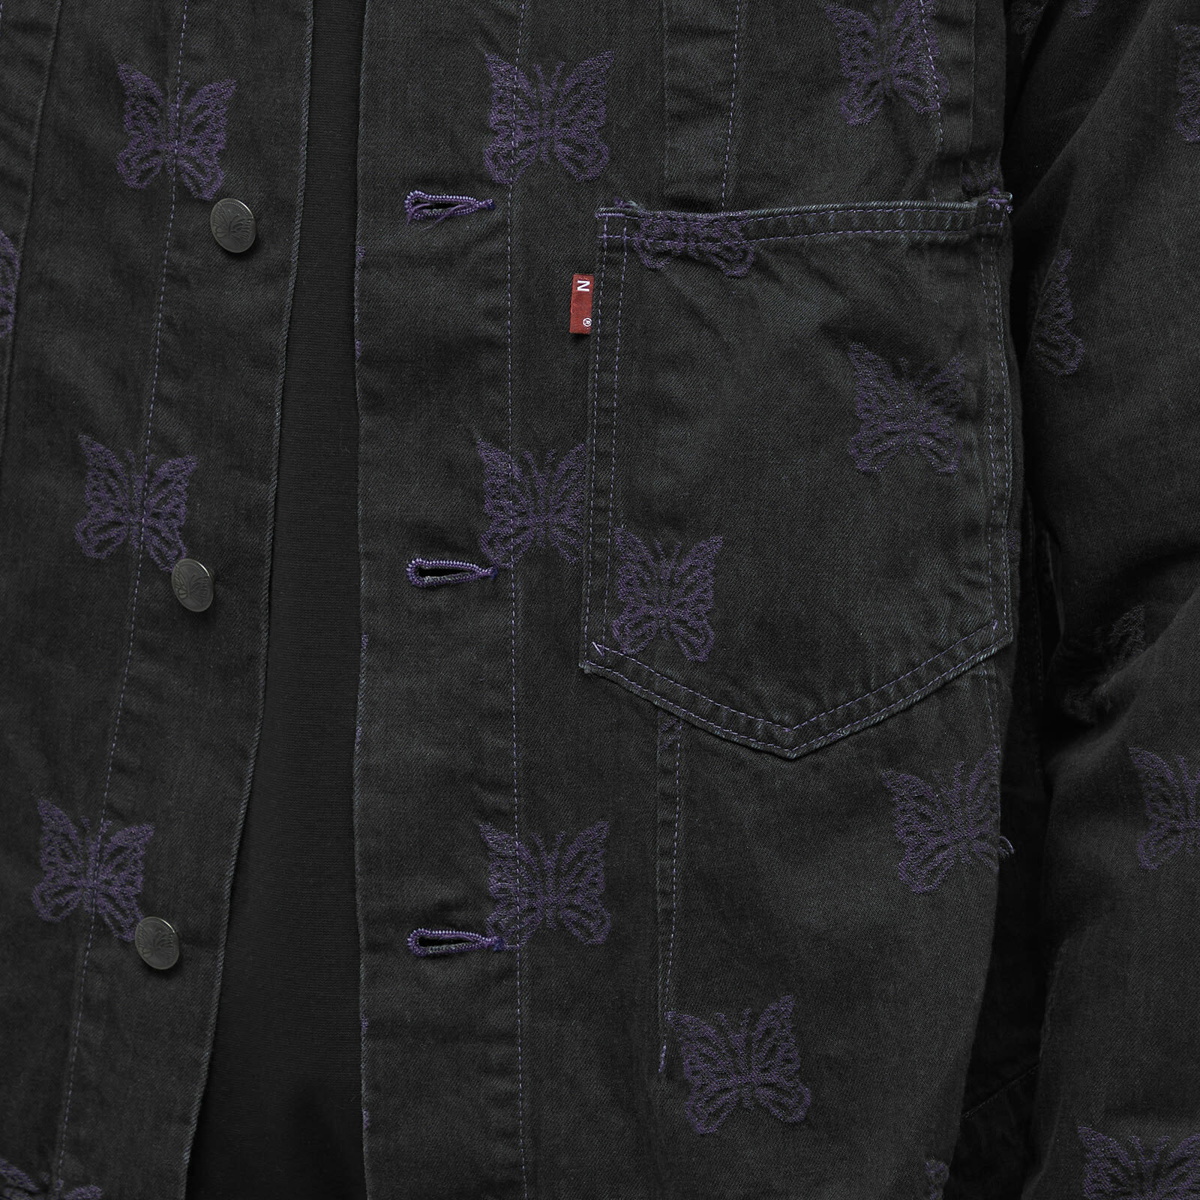 Purple Men's Jacquard Vintage Denim Jacket, Light Indigo, Men's, S, Coats Jackets & Outerwear Denim Jean & Trucker Jackets